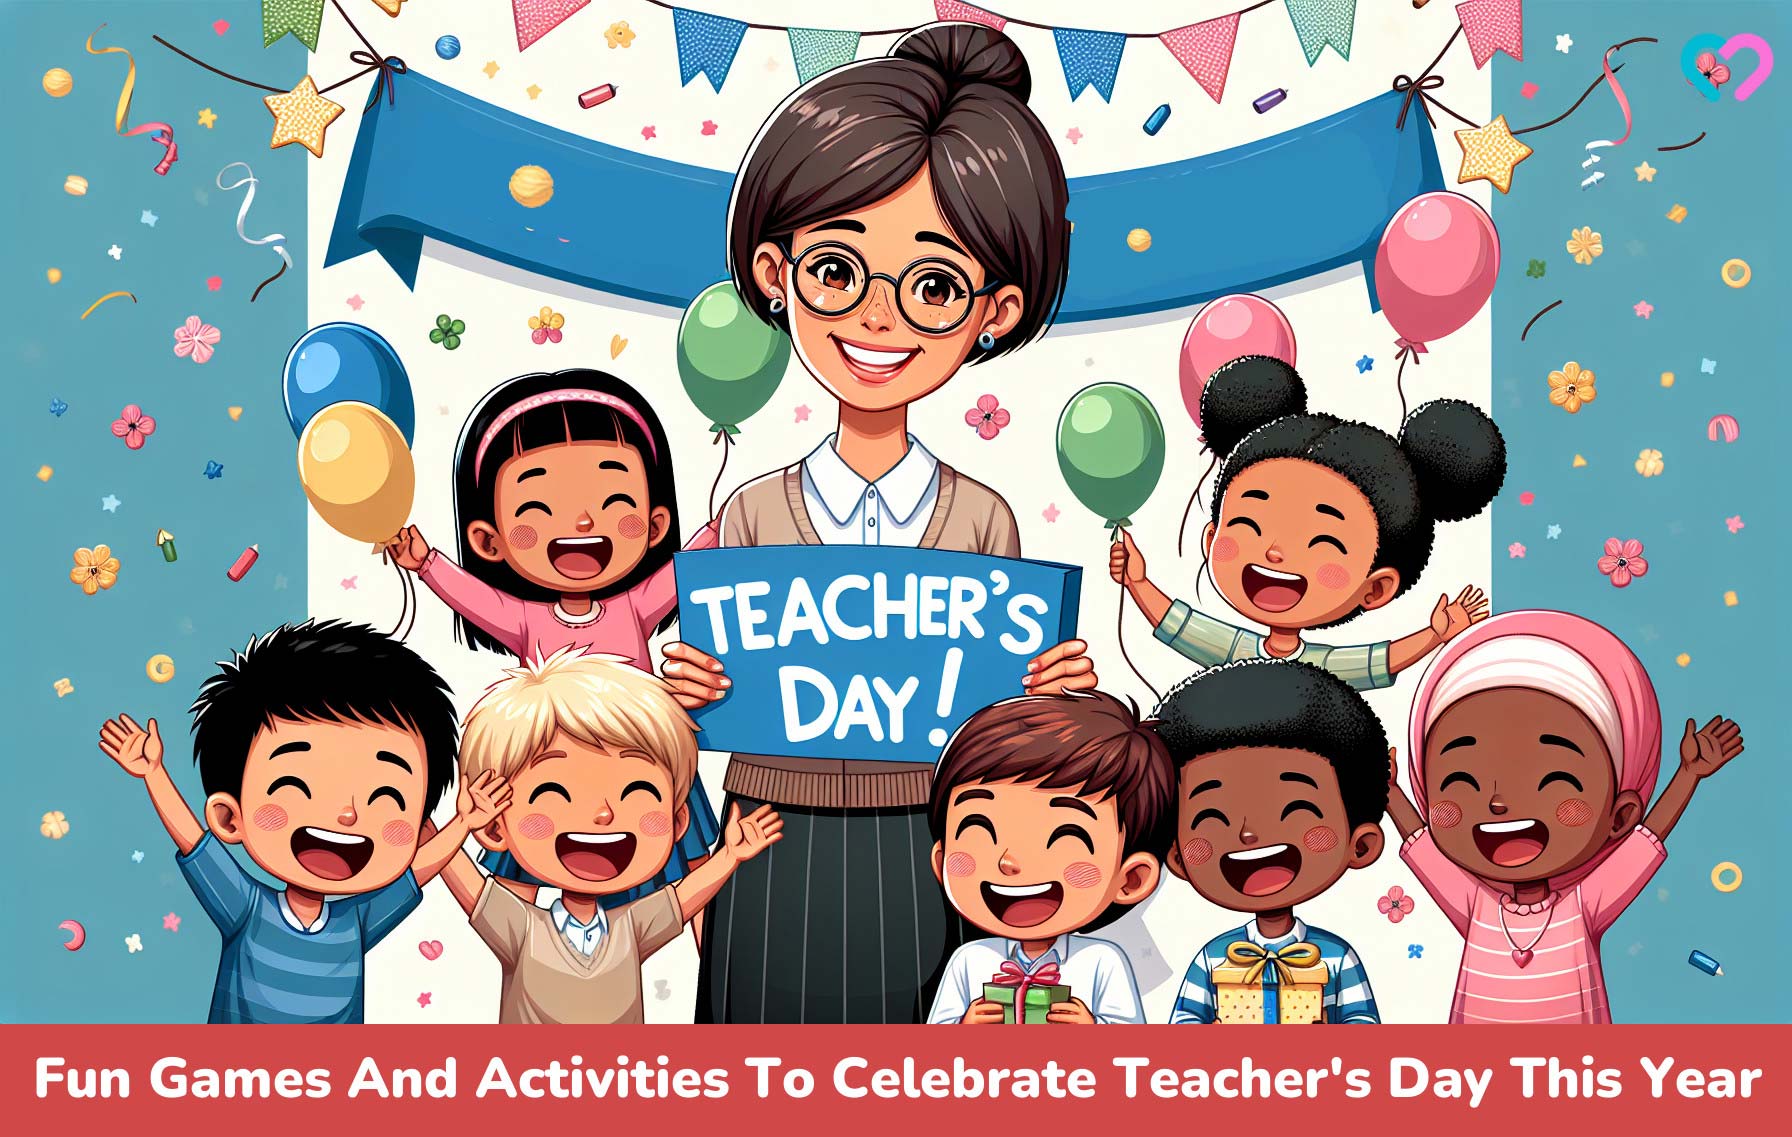 Activities To Celebrate Teacher's Day_illustration